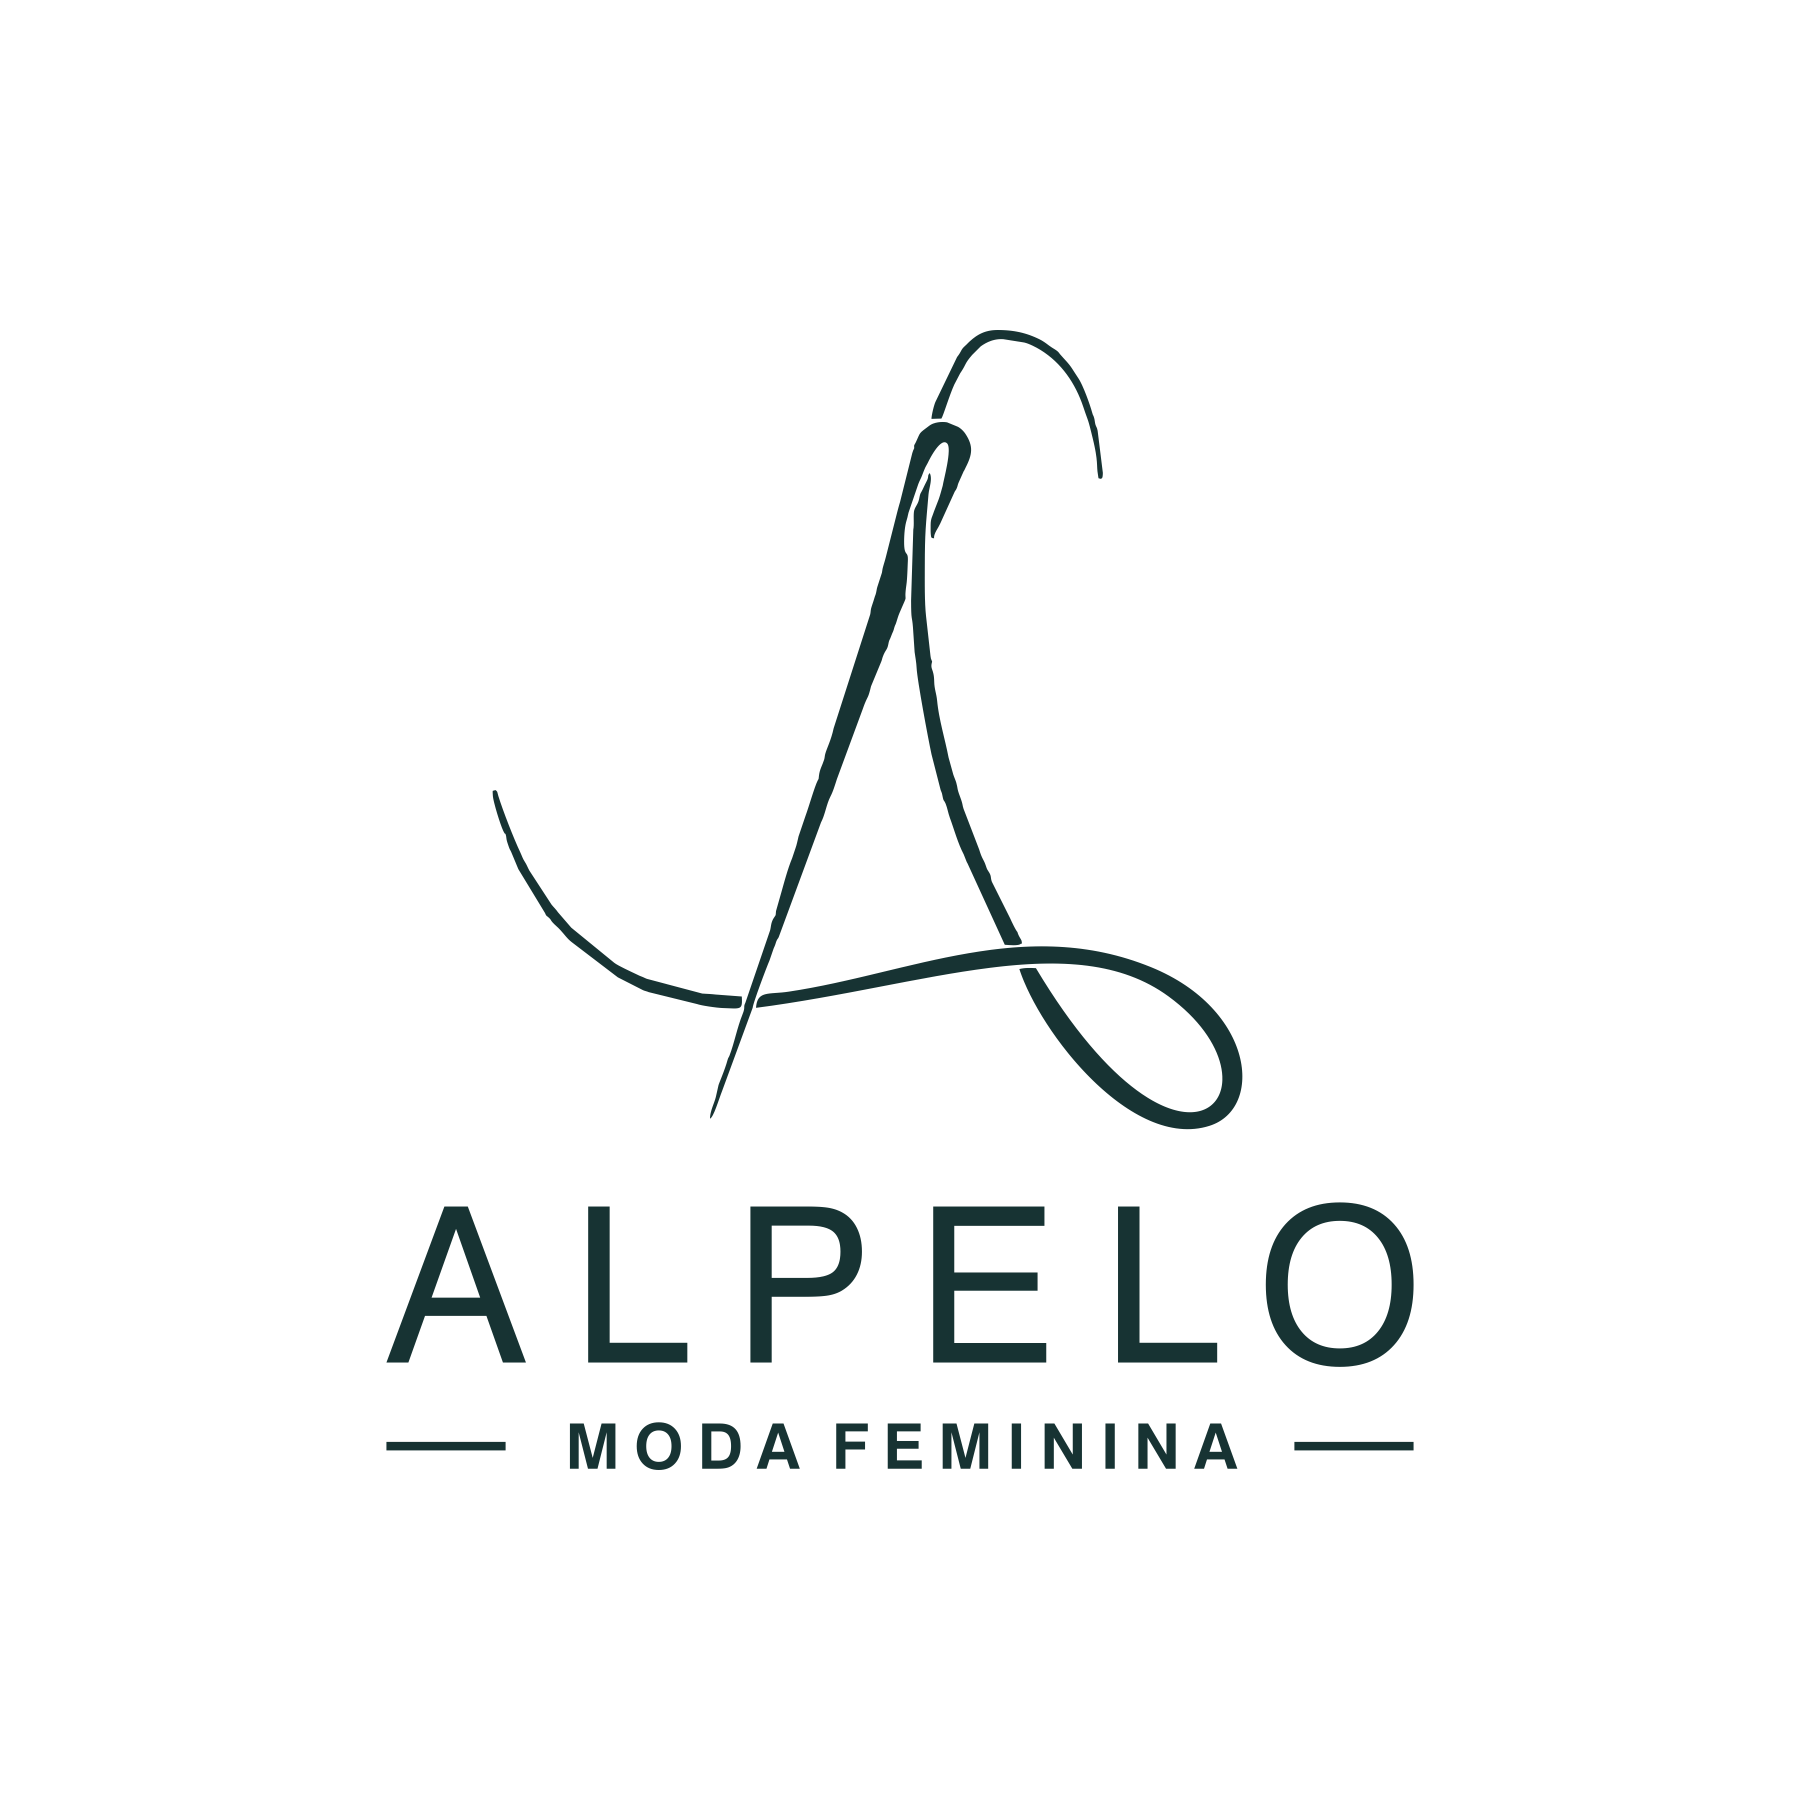 alpelo : Brand Short Description Type Here.